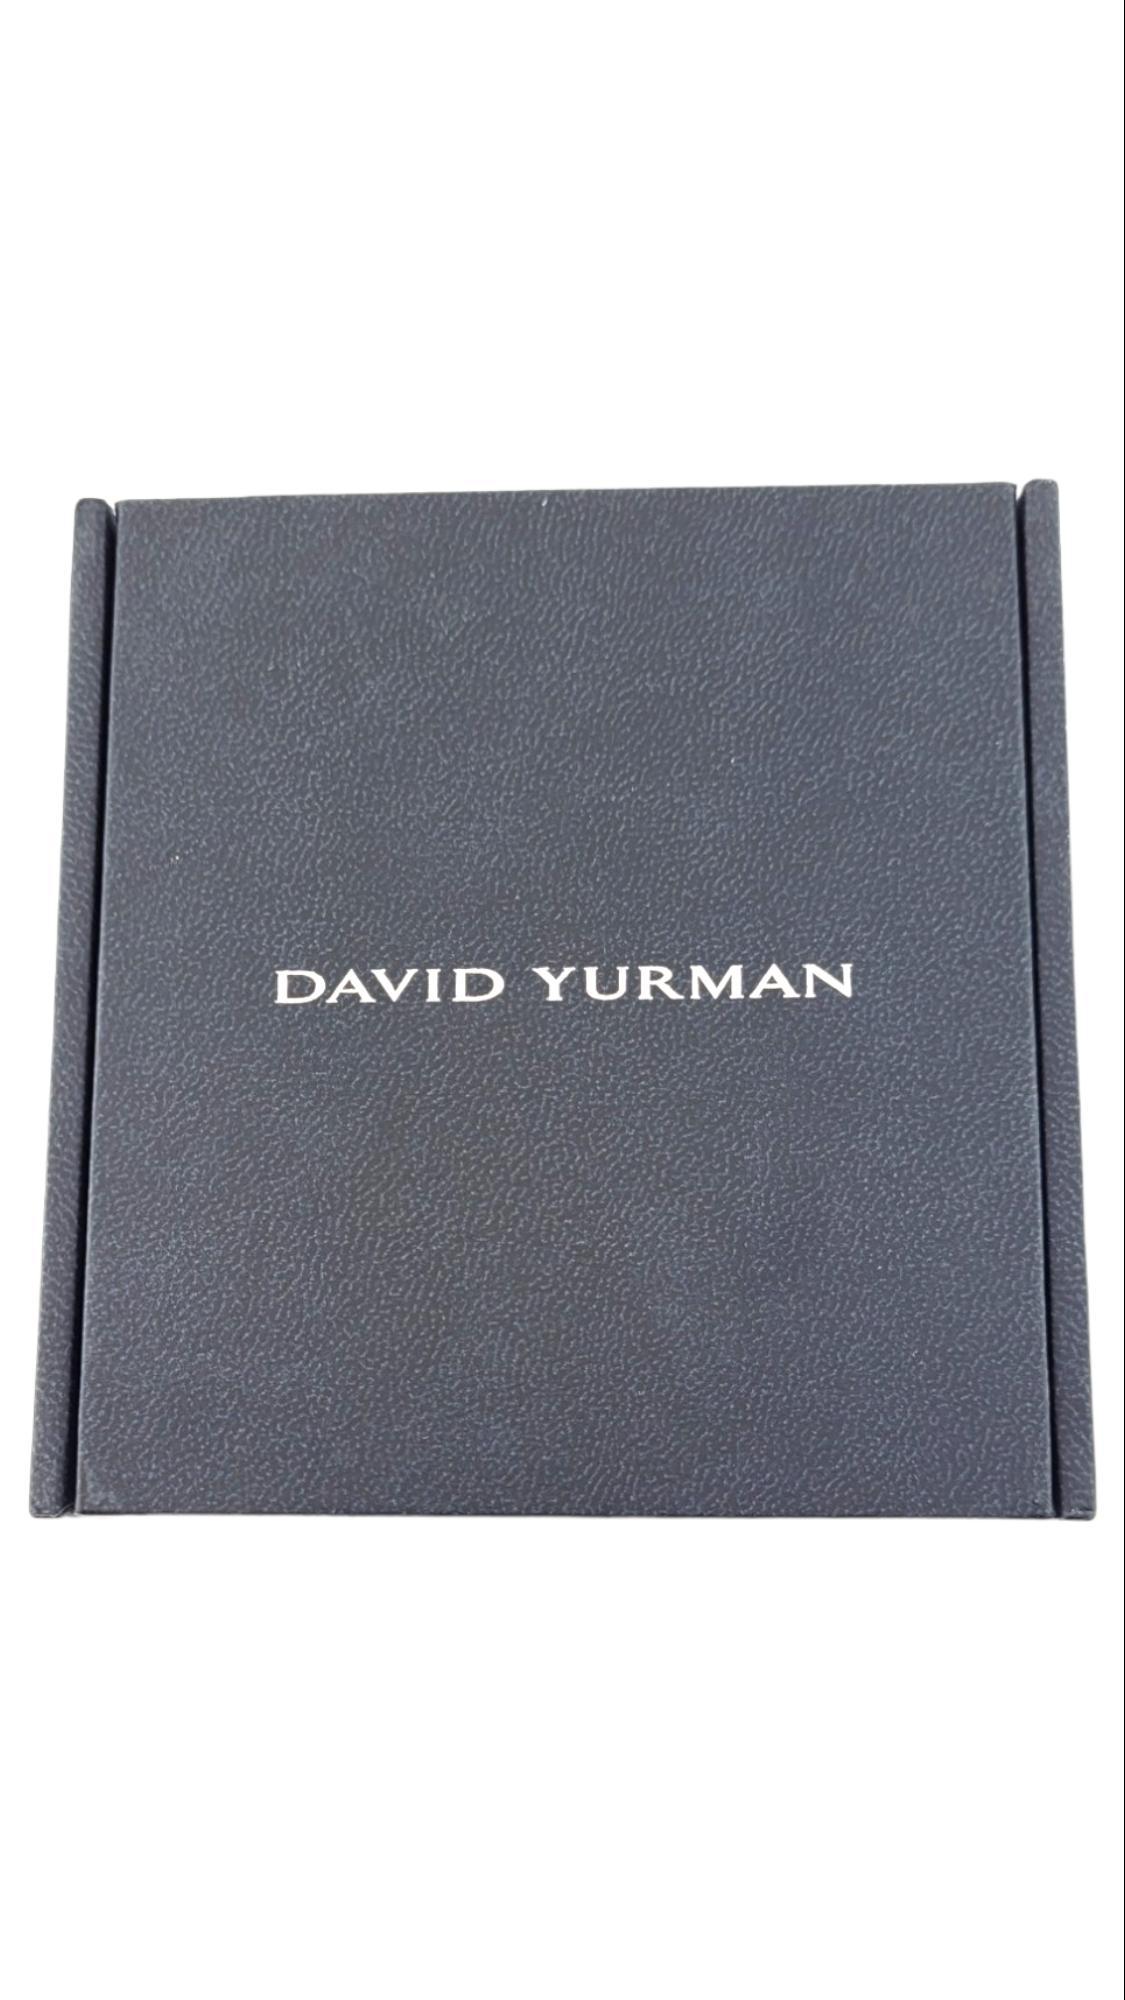 David Yurman 14K & Sterling Silver Box Chain Bracelet with Box #15199 For Sale 2